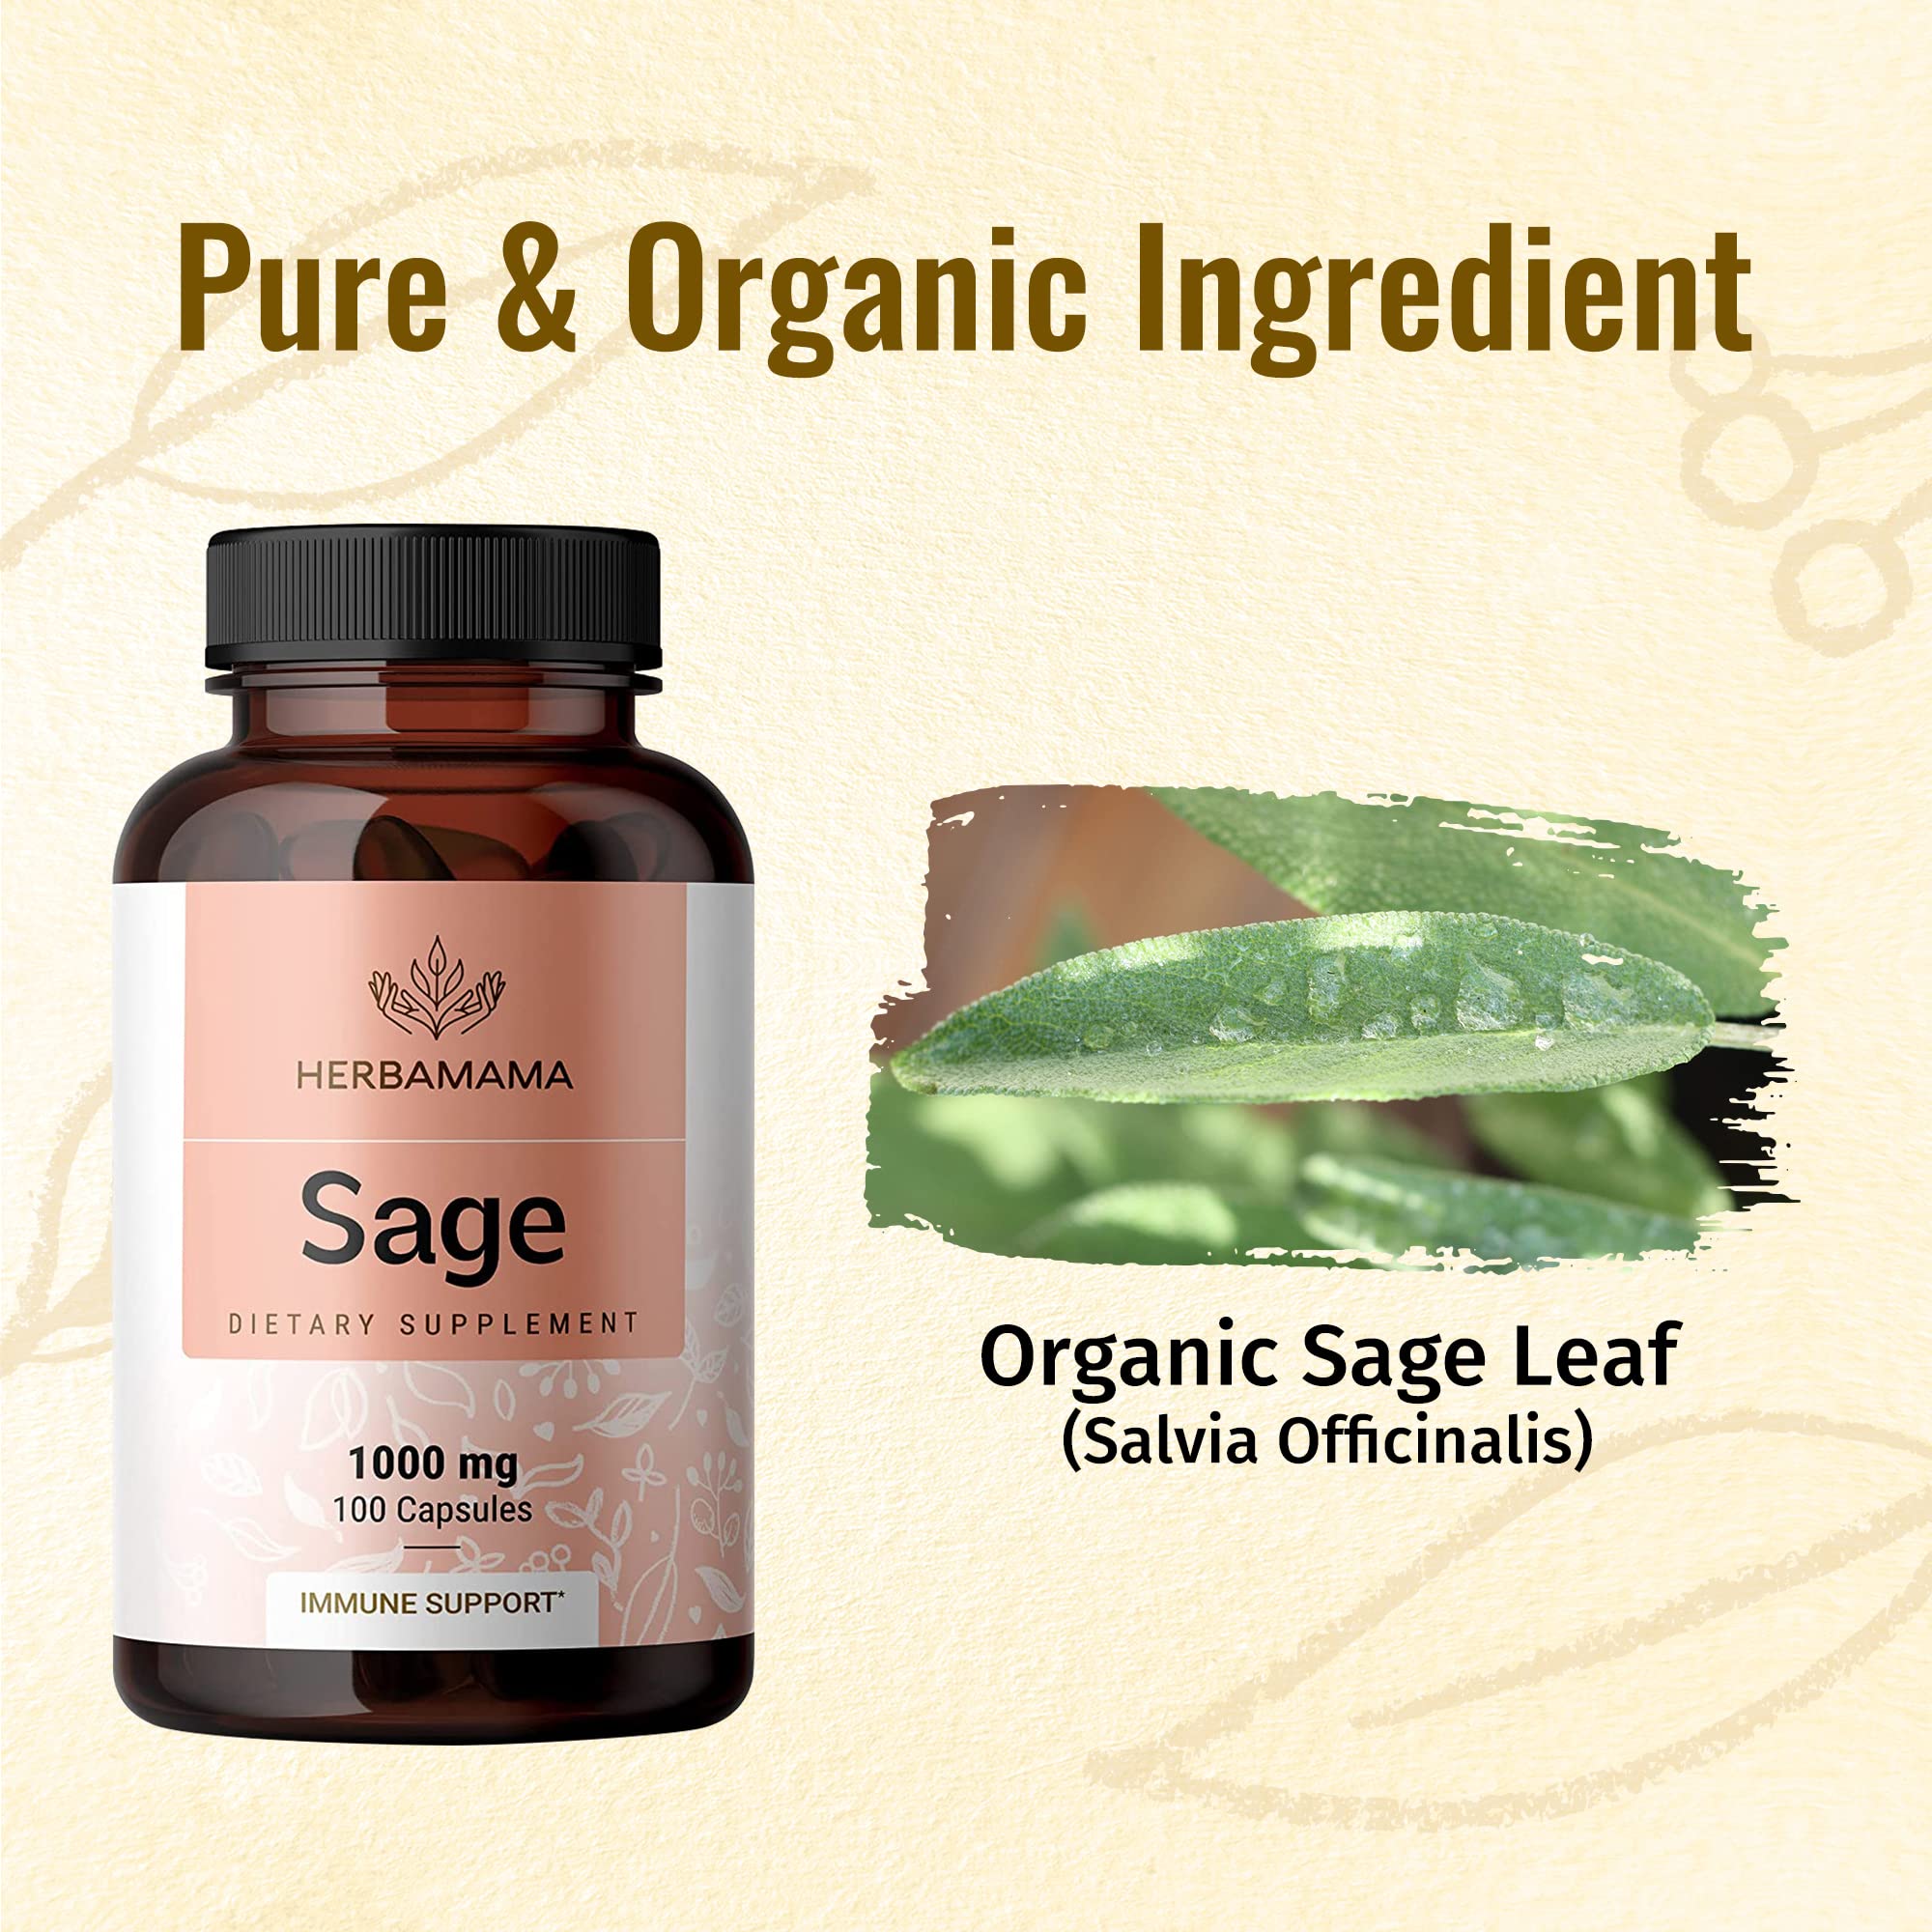 HERBAMAMA Sage Capsules - 1000mg, 100 Capsules - Organic Salvia Officinalis Supplement Promoting Brain Function, Immunity & Digestive Wellness - Vegan, Non-GMO Sage Leaf Extract